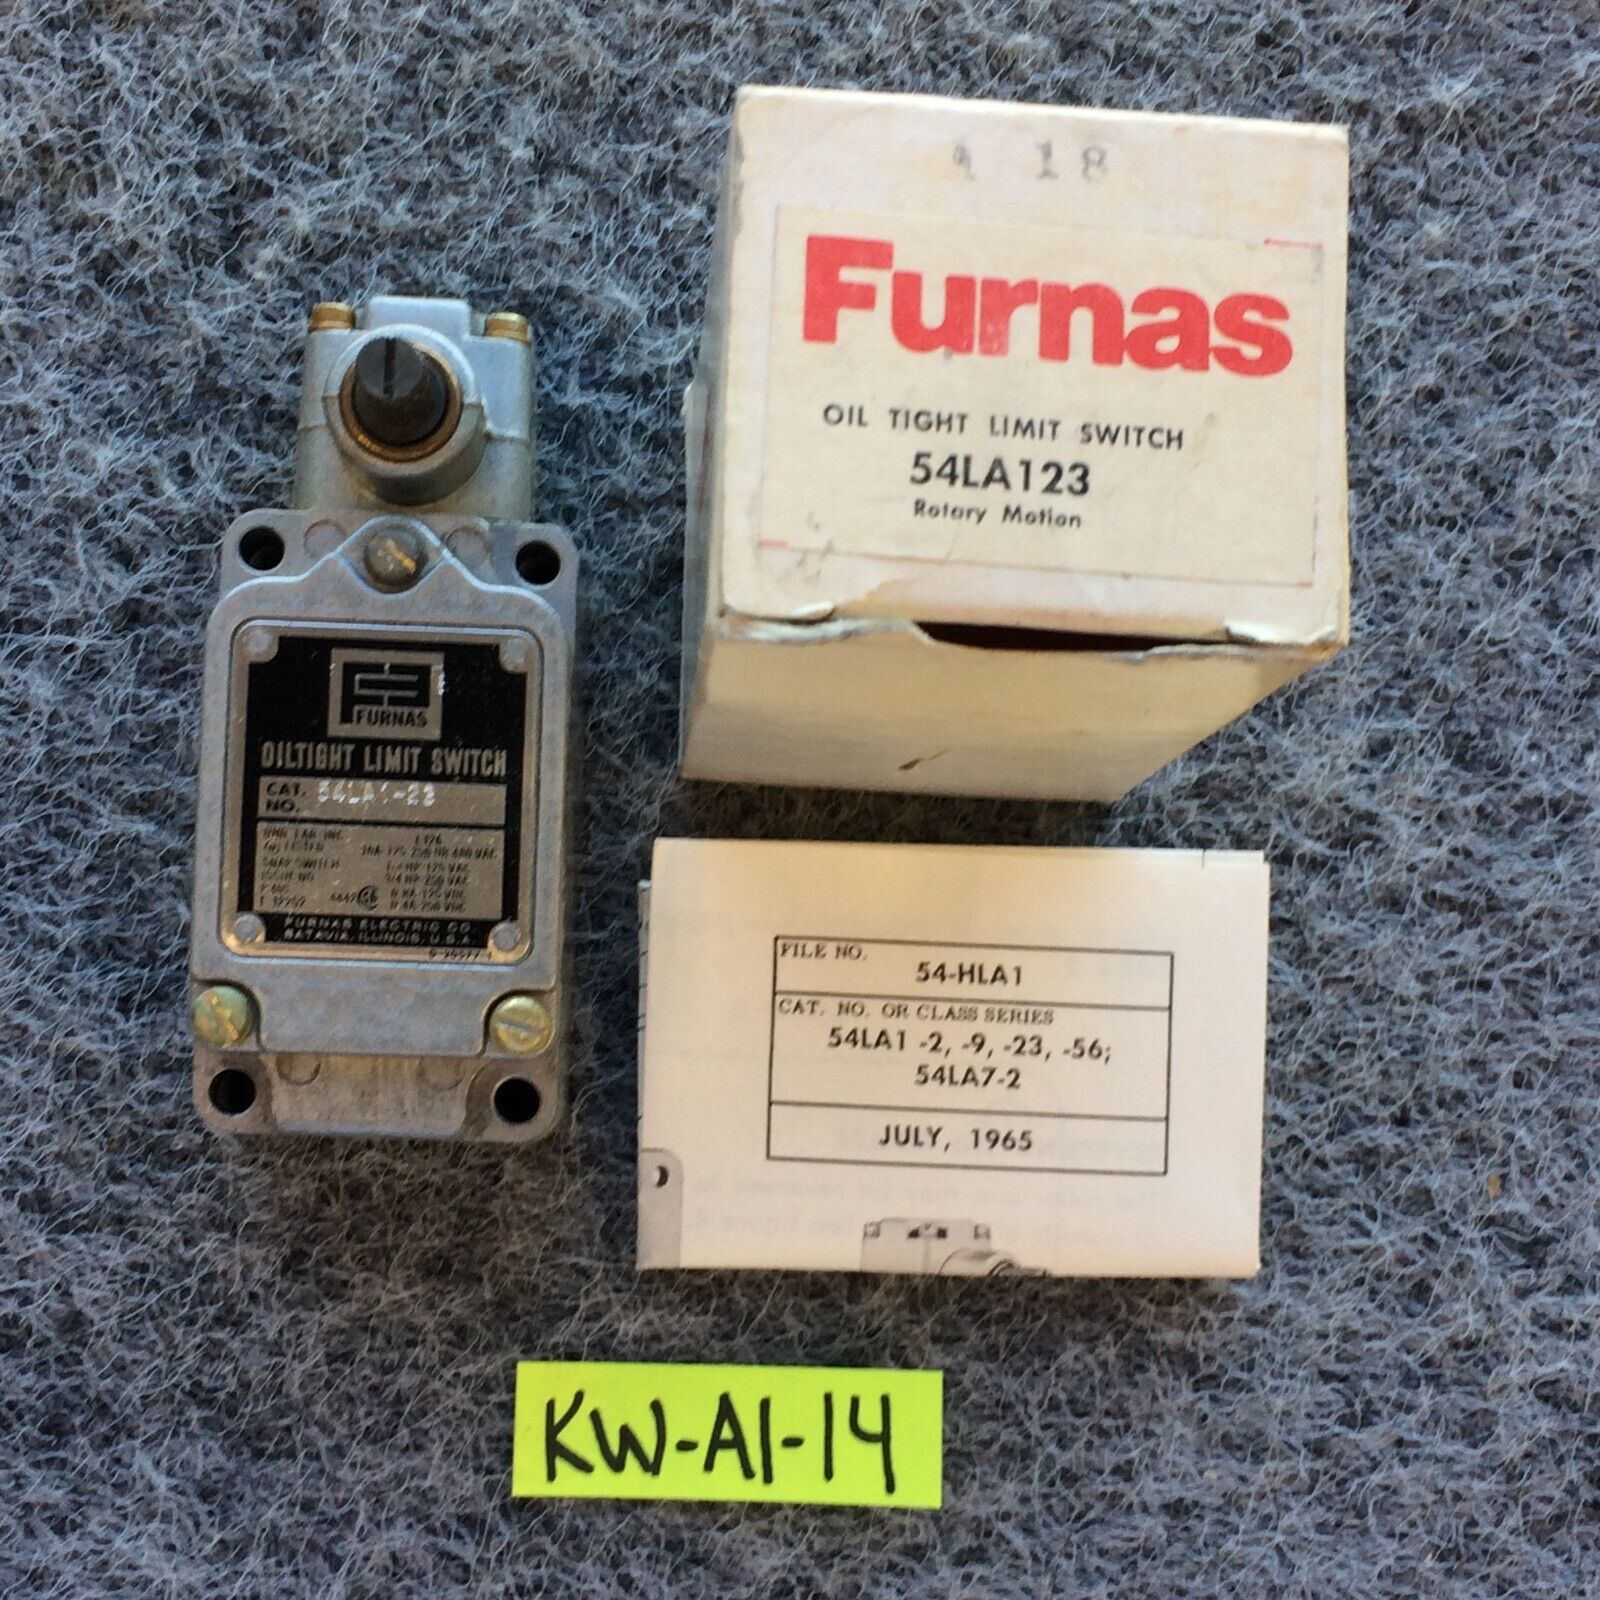 NOS Furnas 54LA123 Oil Tight Rotary Limit Switch 1 Year Warranty